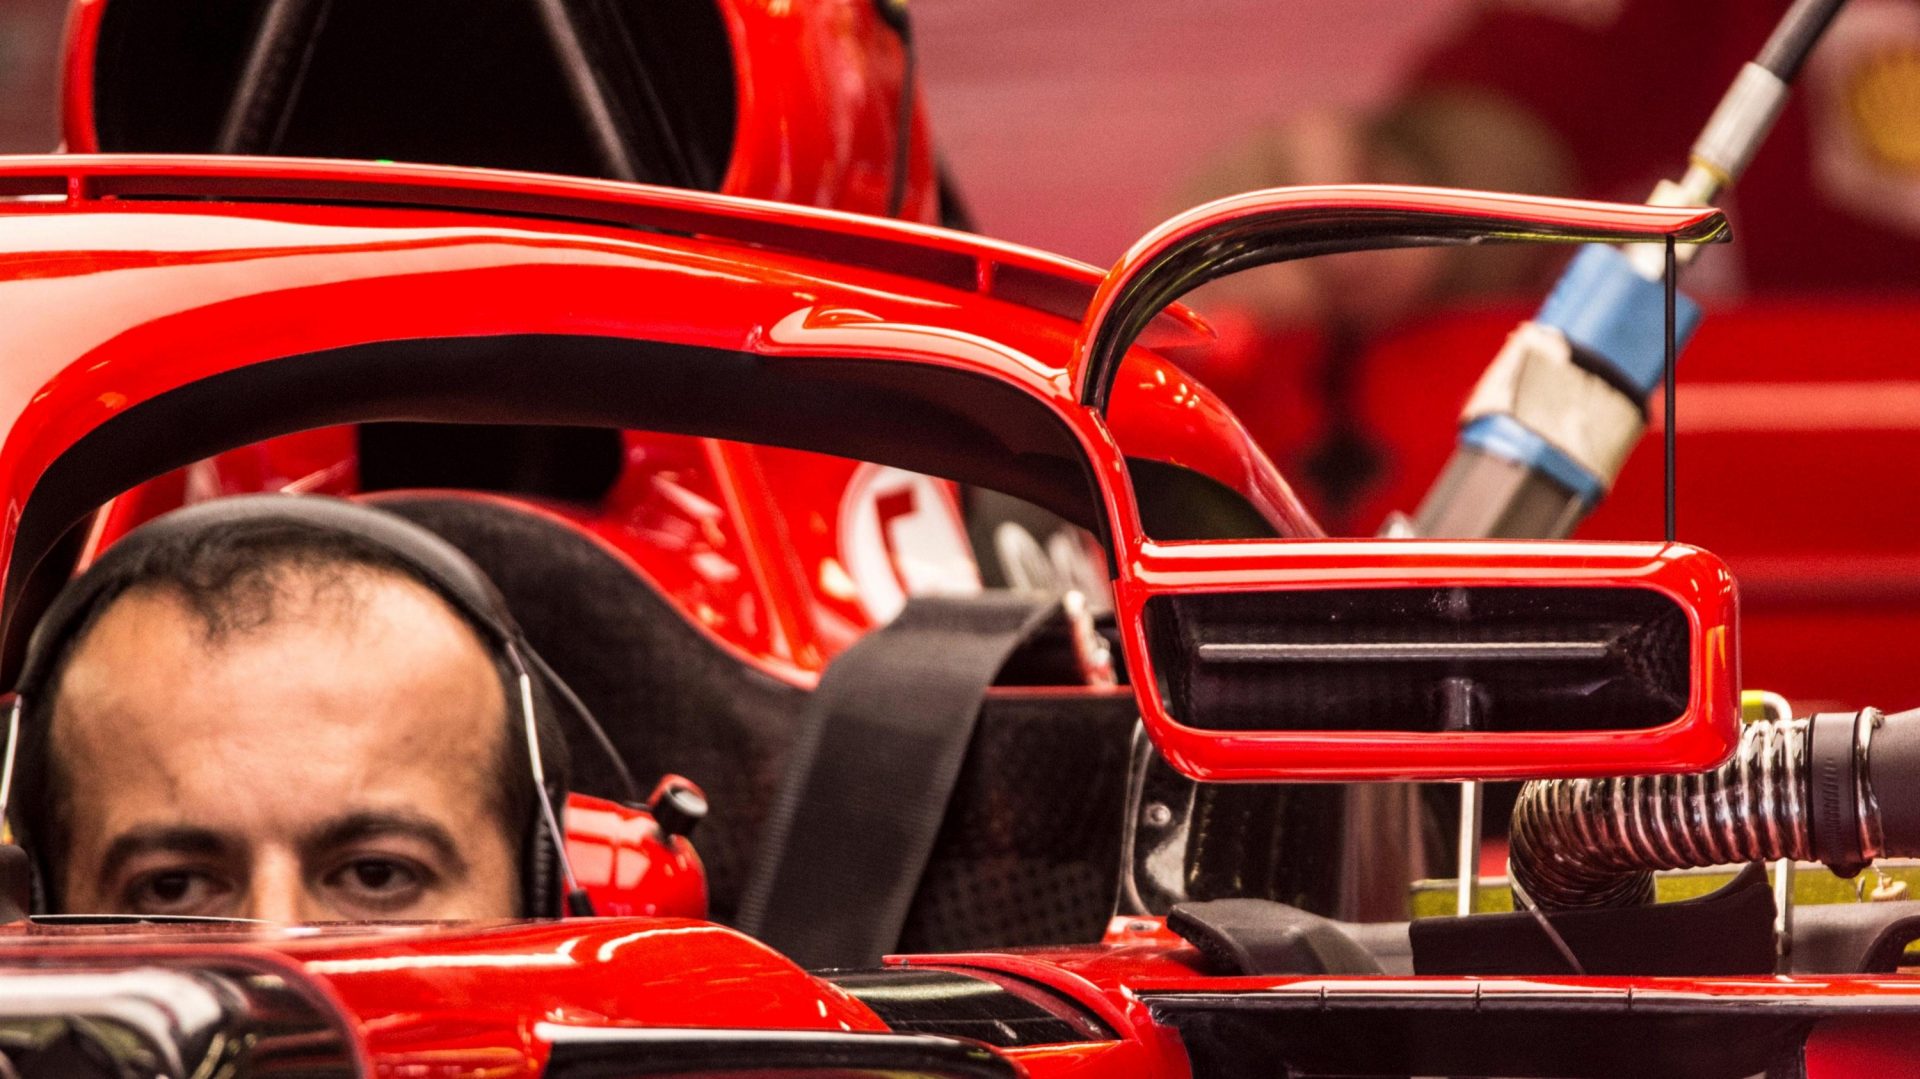 The FIA felt the Ferrari mounting provided some sort of aero advantage